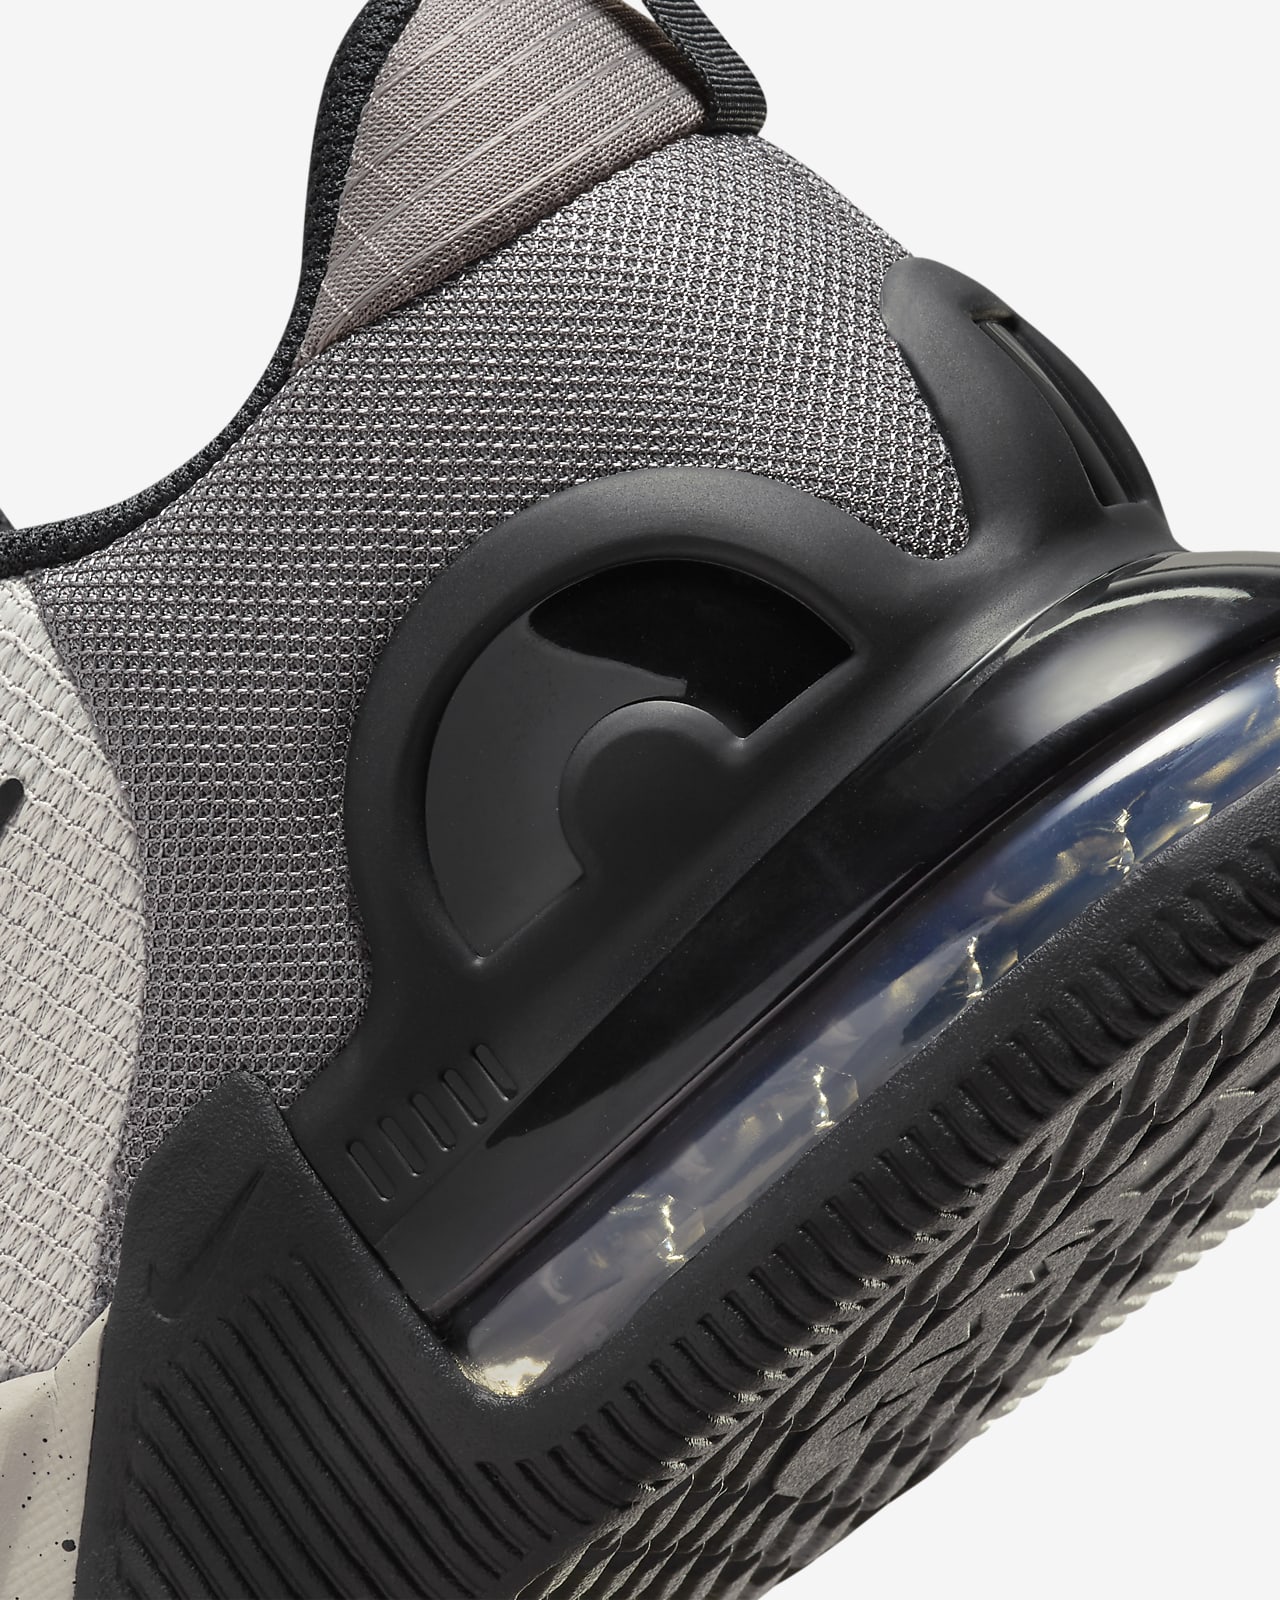 Zapatillas grises Nike Air Max Alpha Trainer 5 de hombre. MEGACALZADO